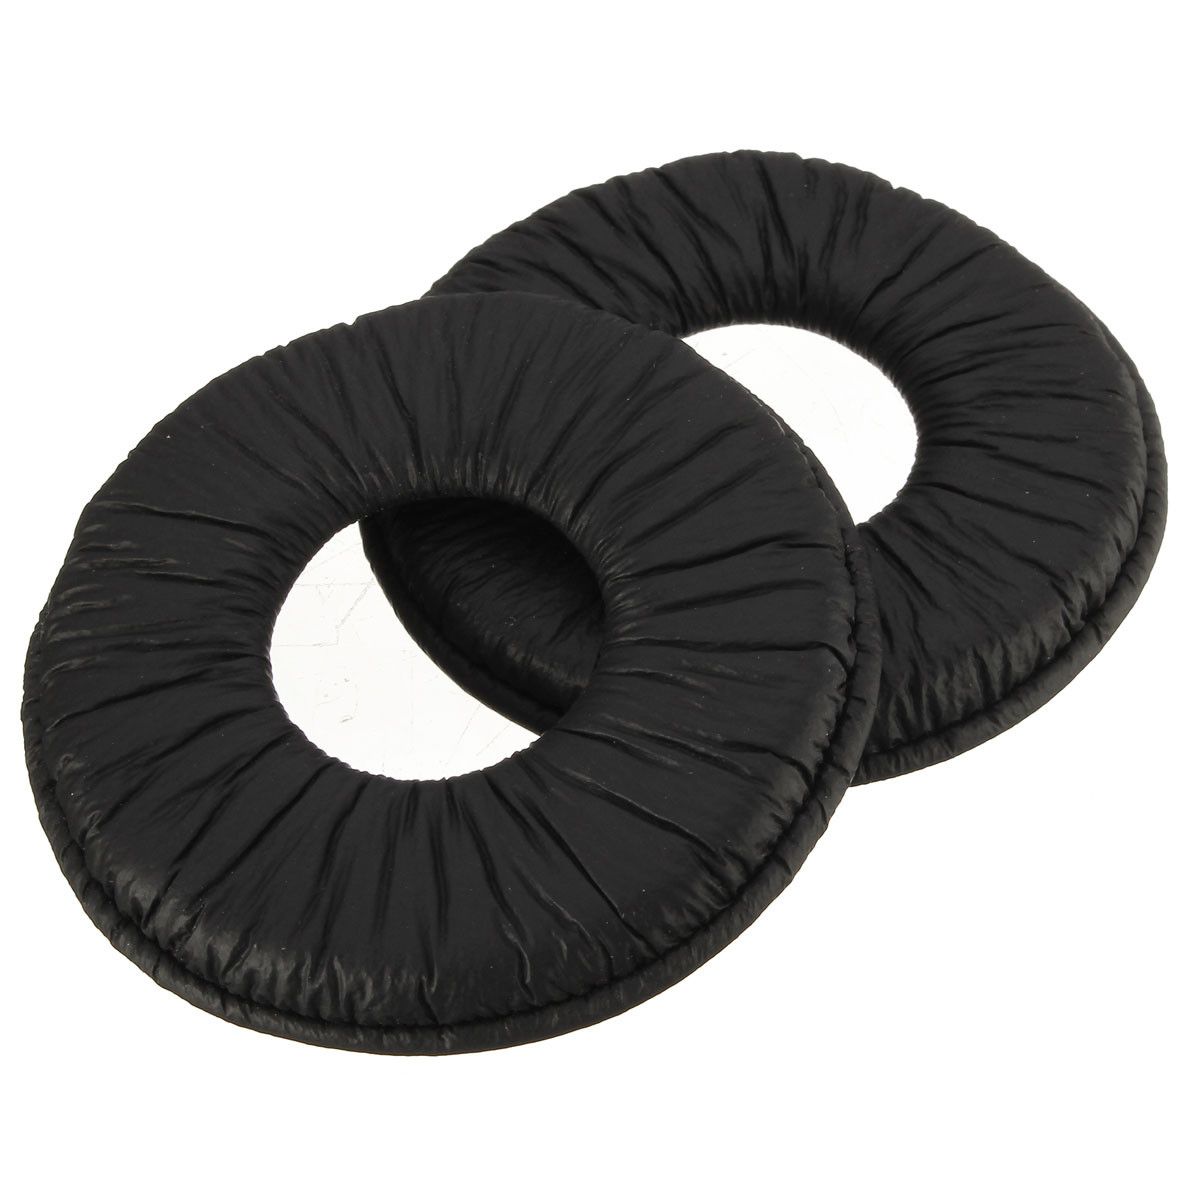 1-Pair-Soft-Foam-Replacement-Ear-Pads-Cushion-for-Sony-MDR-V150-V250-V300-V100-Headphone-1066666